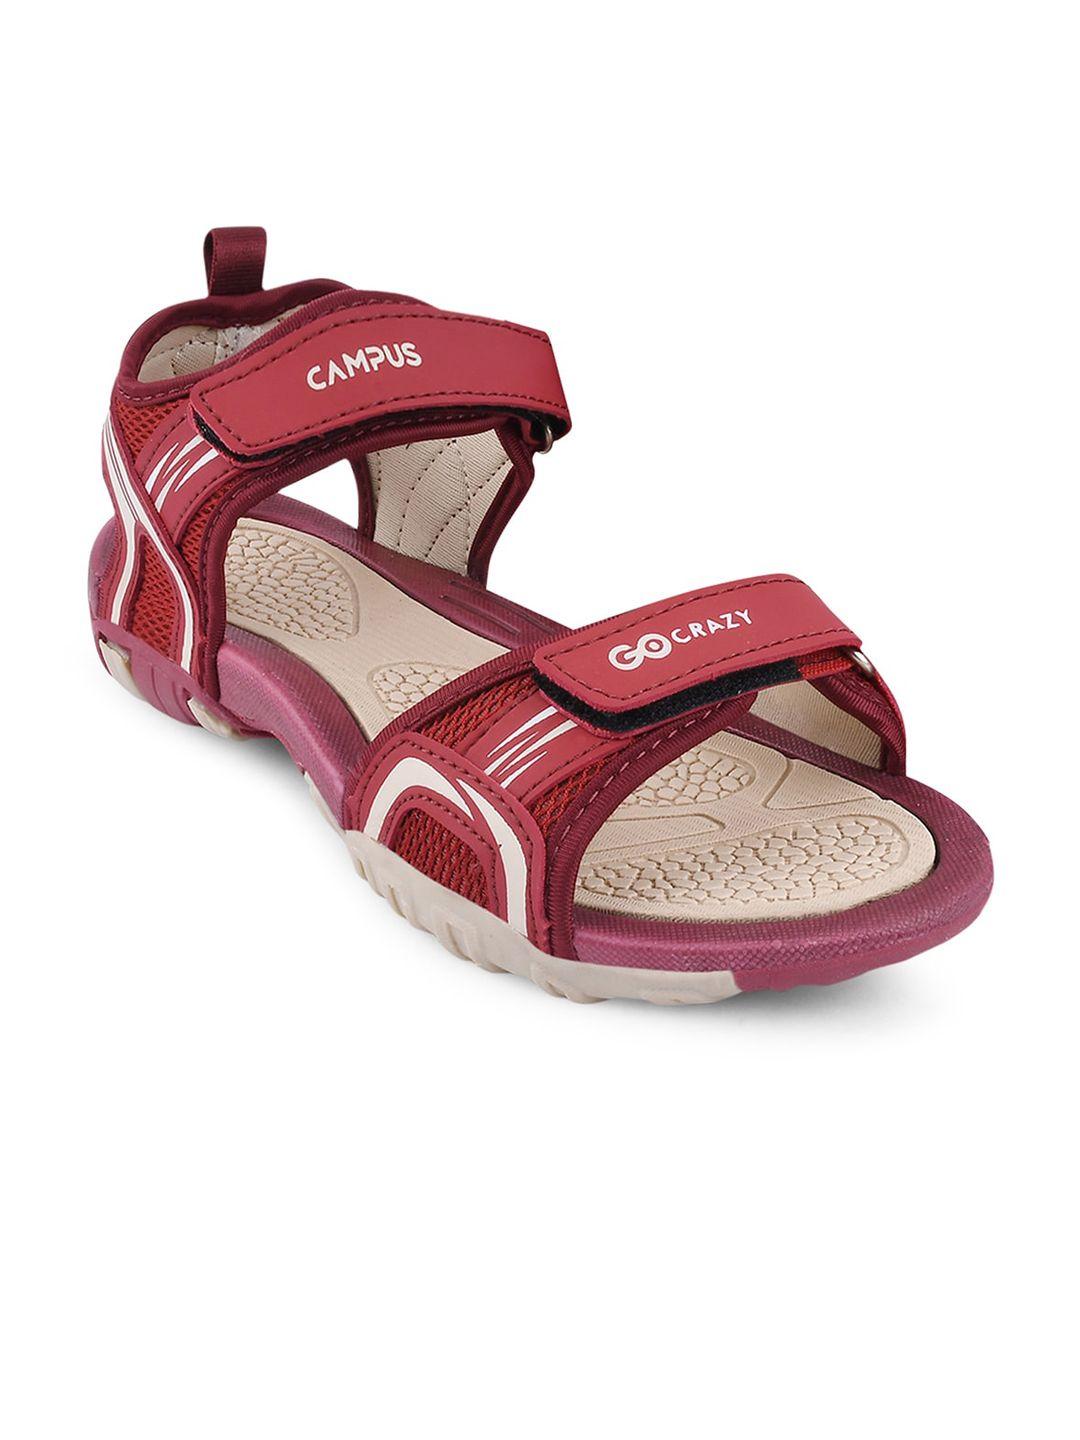 campus kids red & cream solid sports sandals